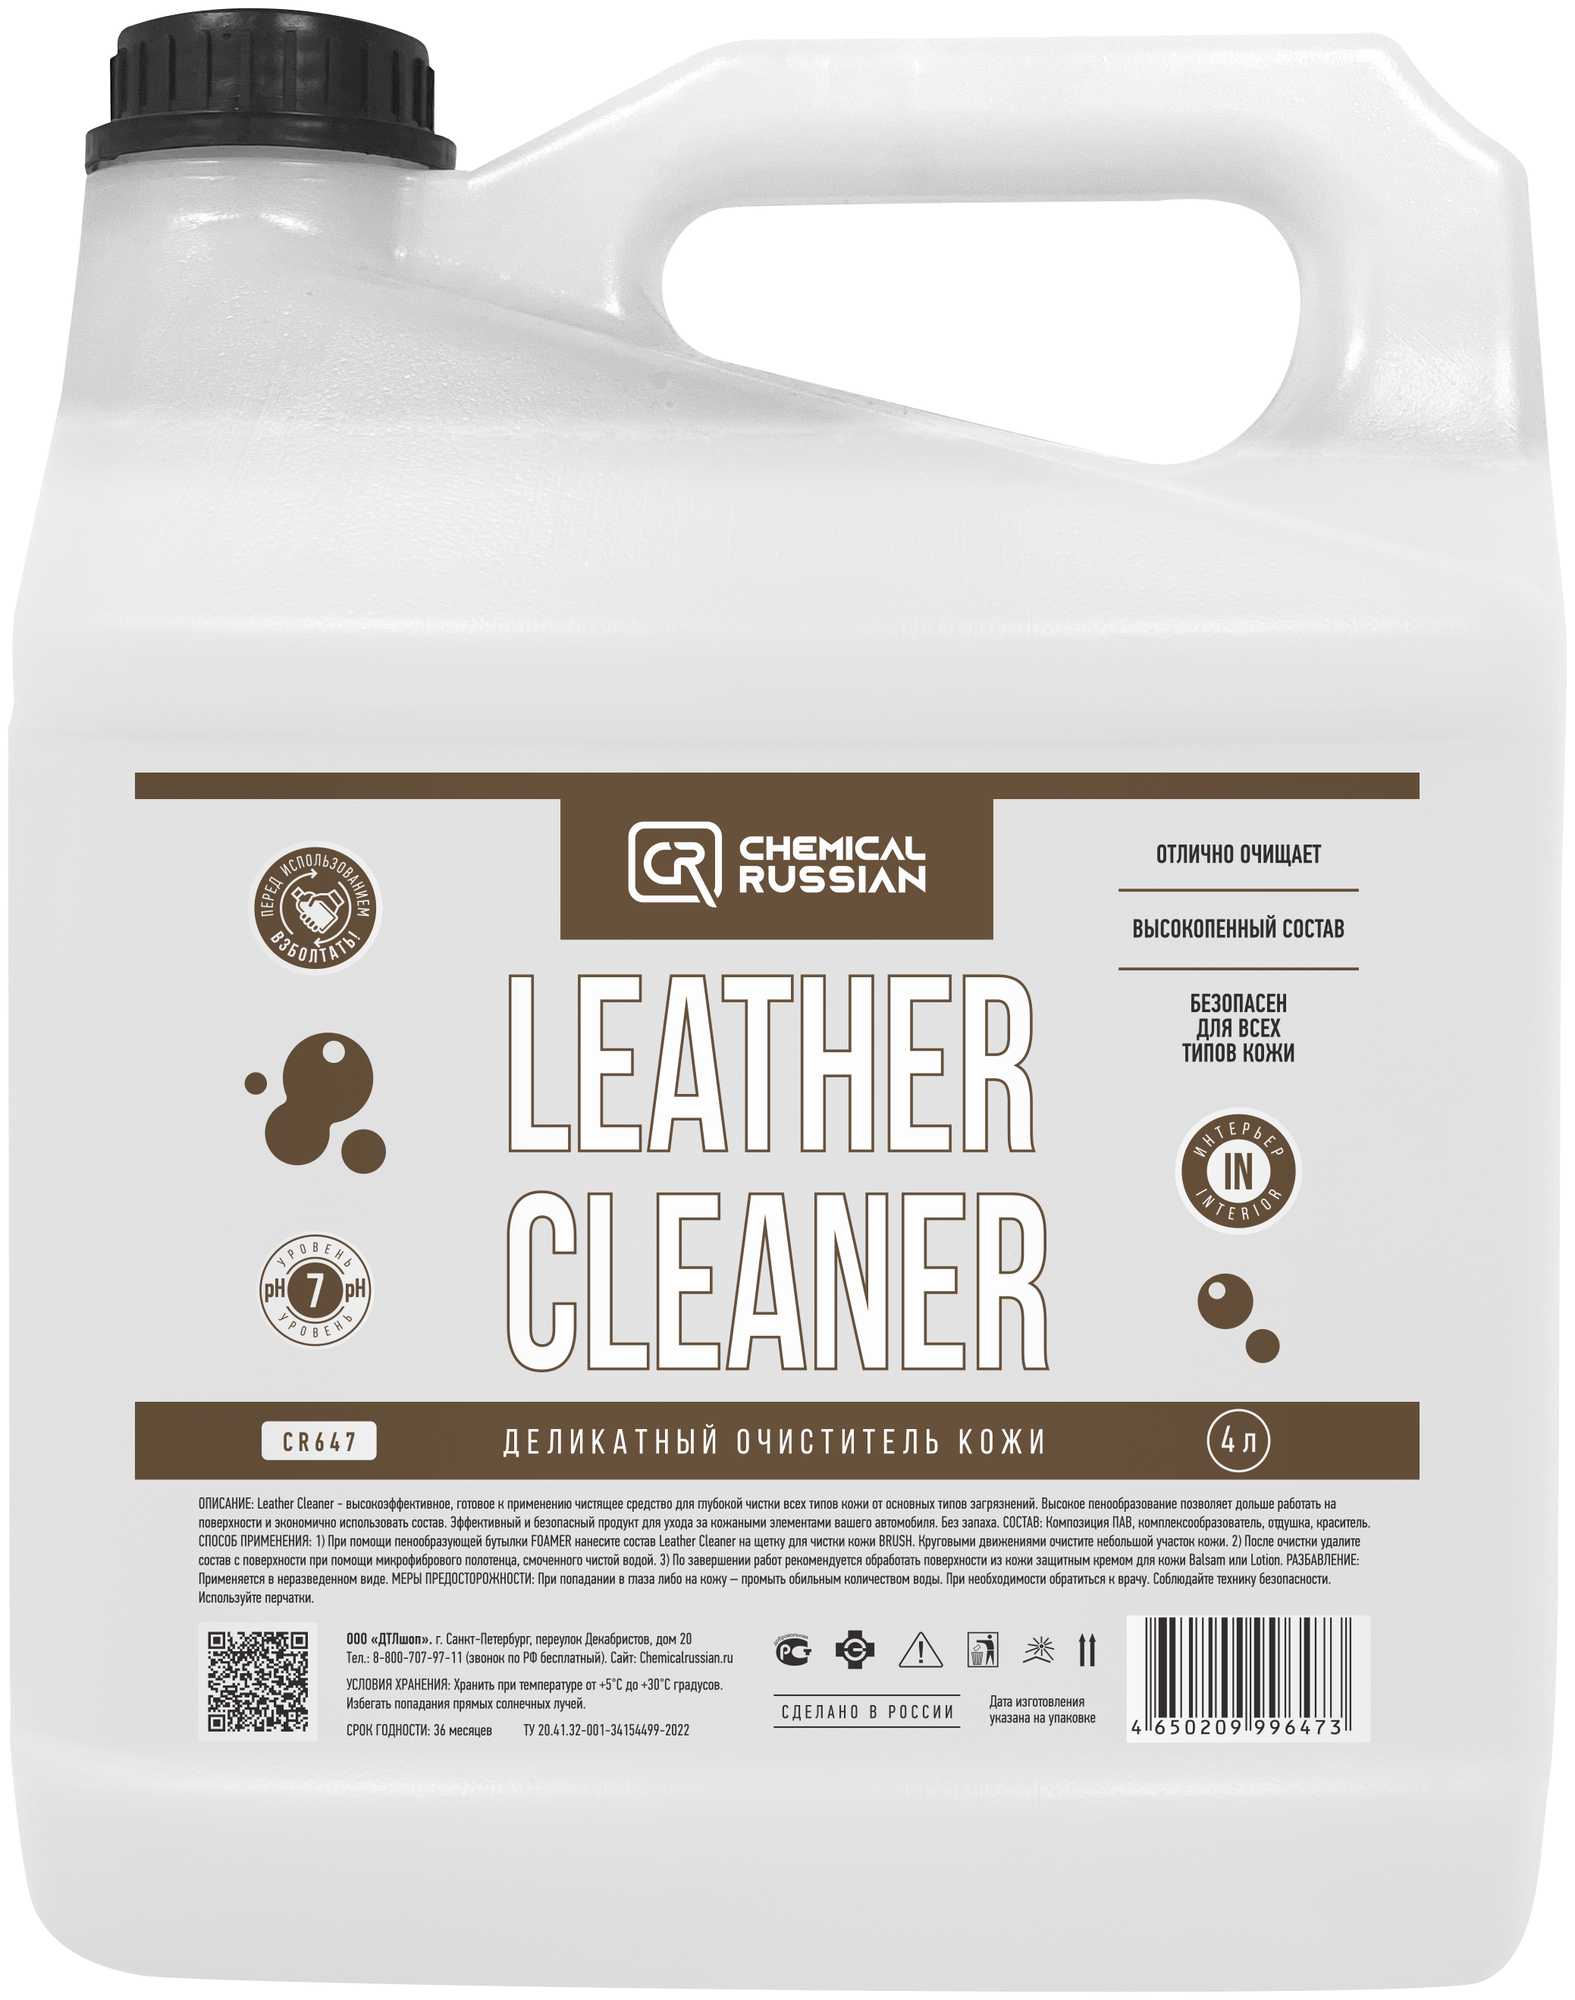 Очиститель кожи - Leather Cleaner, 4 л, Chemical Russian